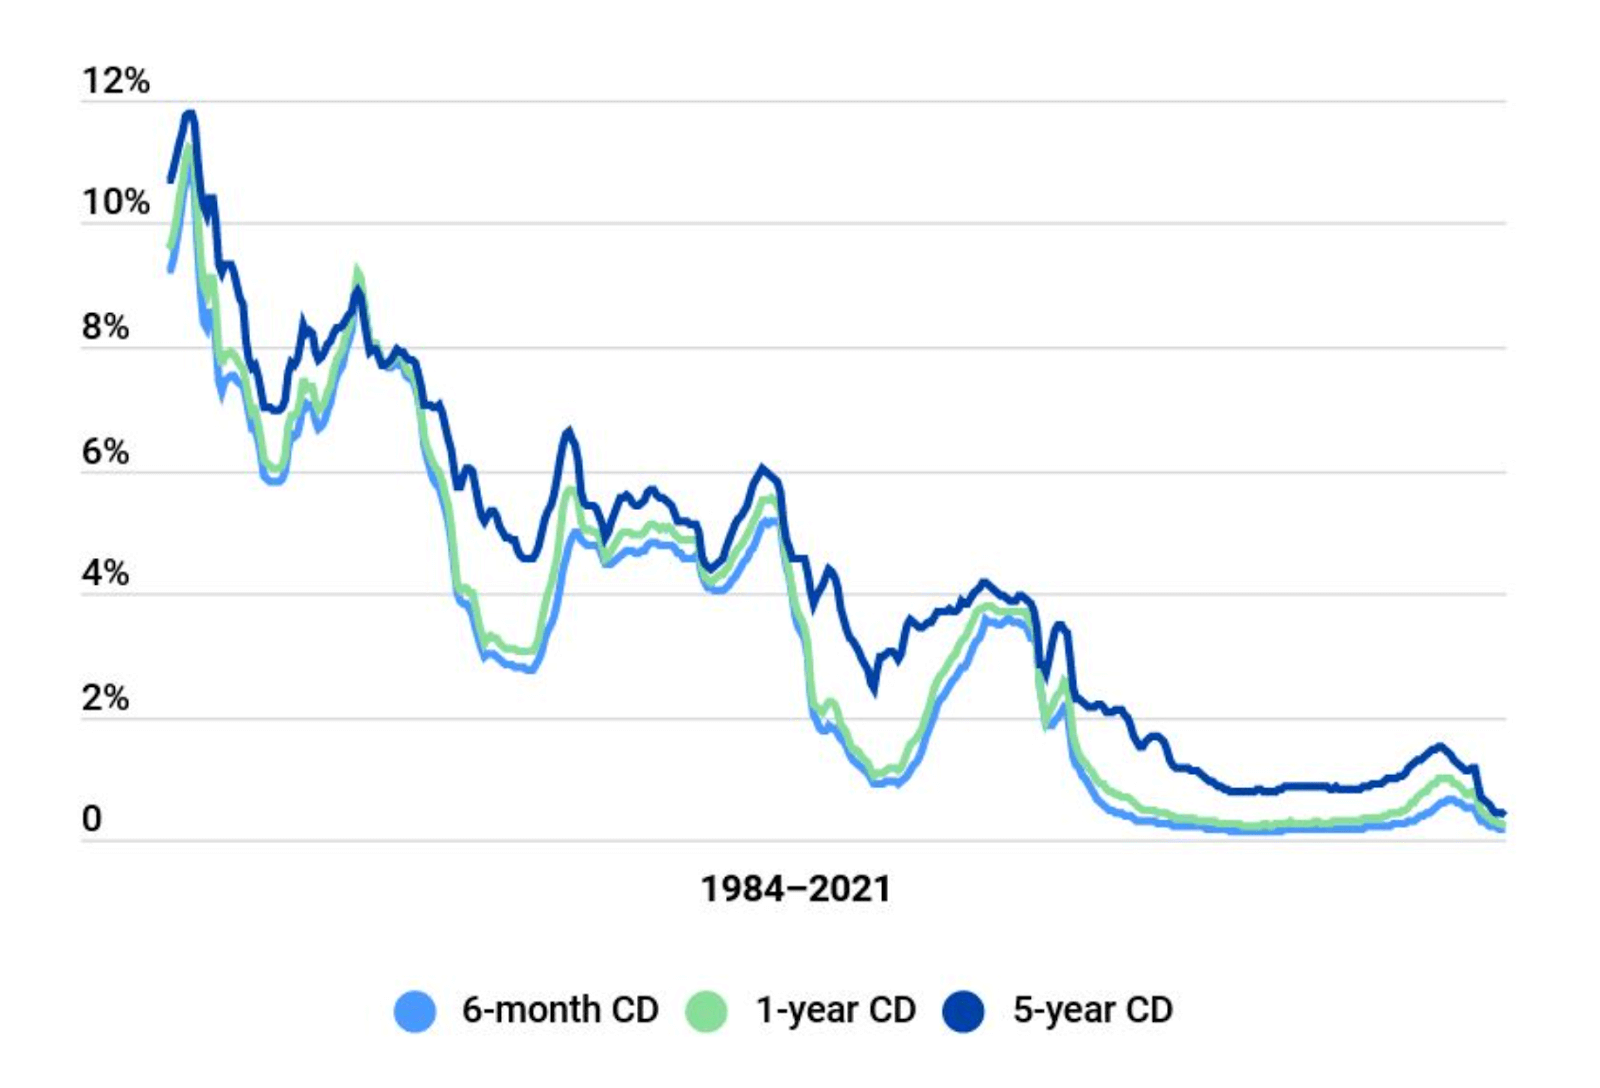 Historic CD rates